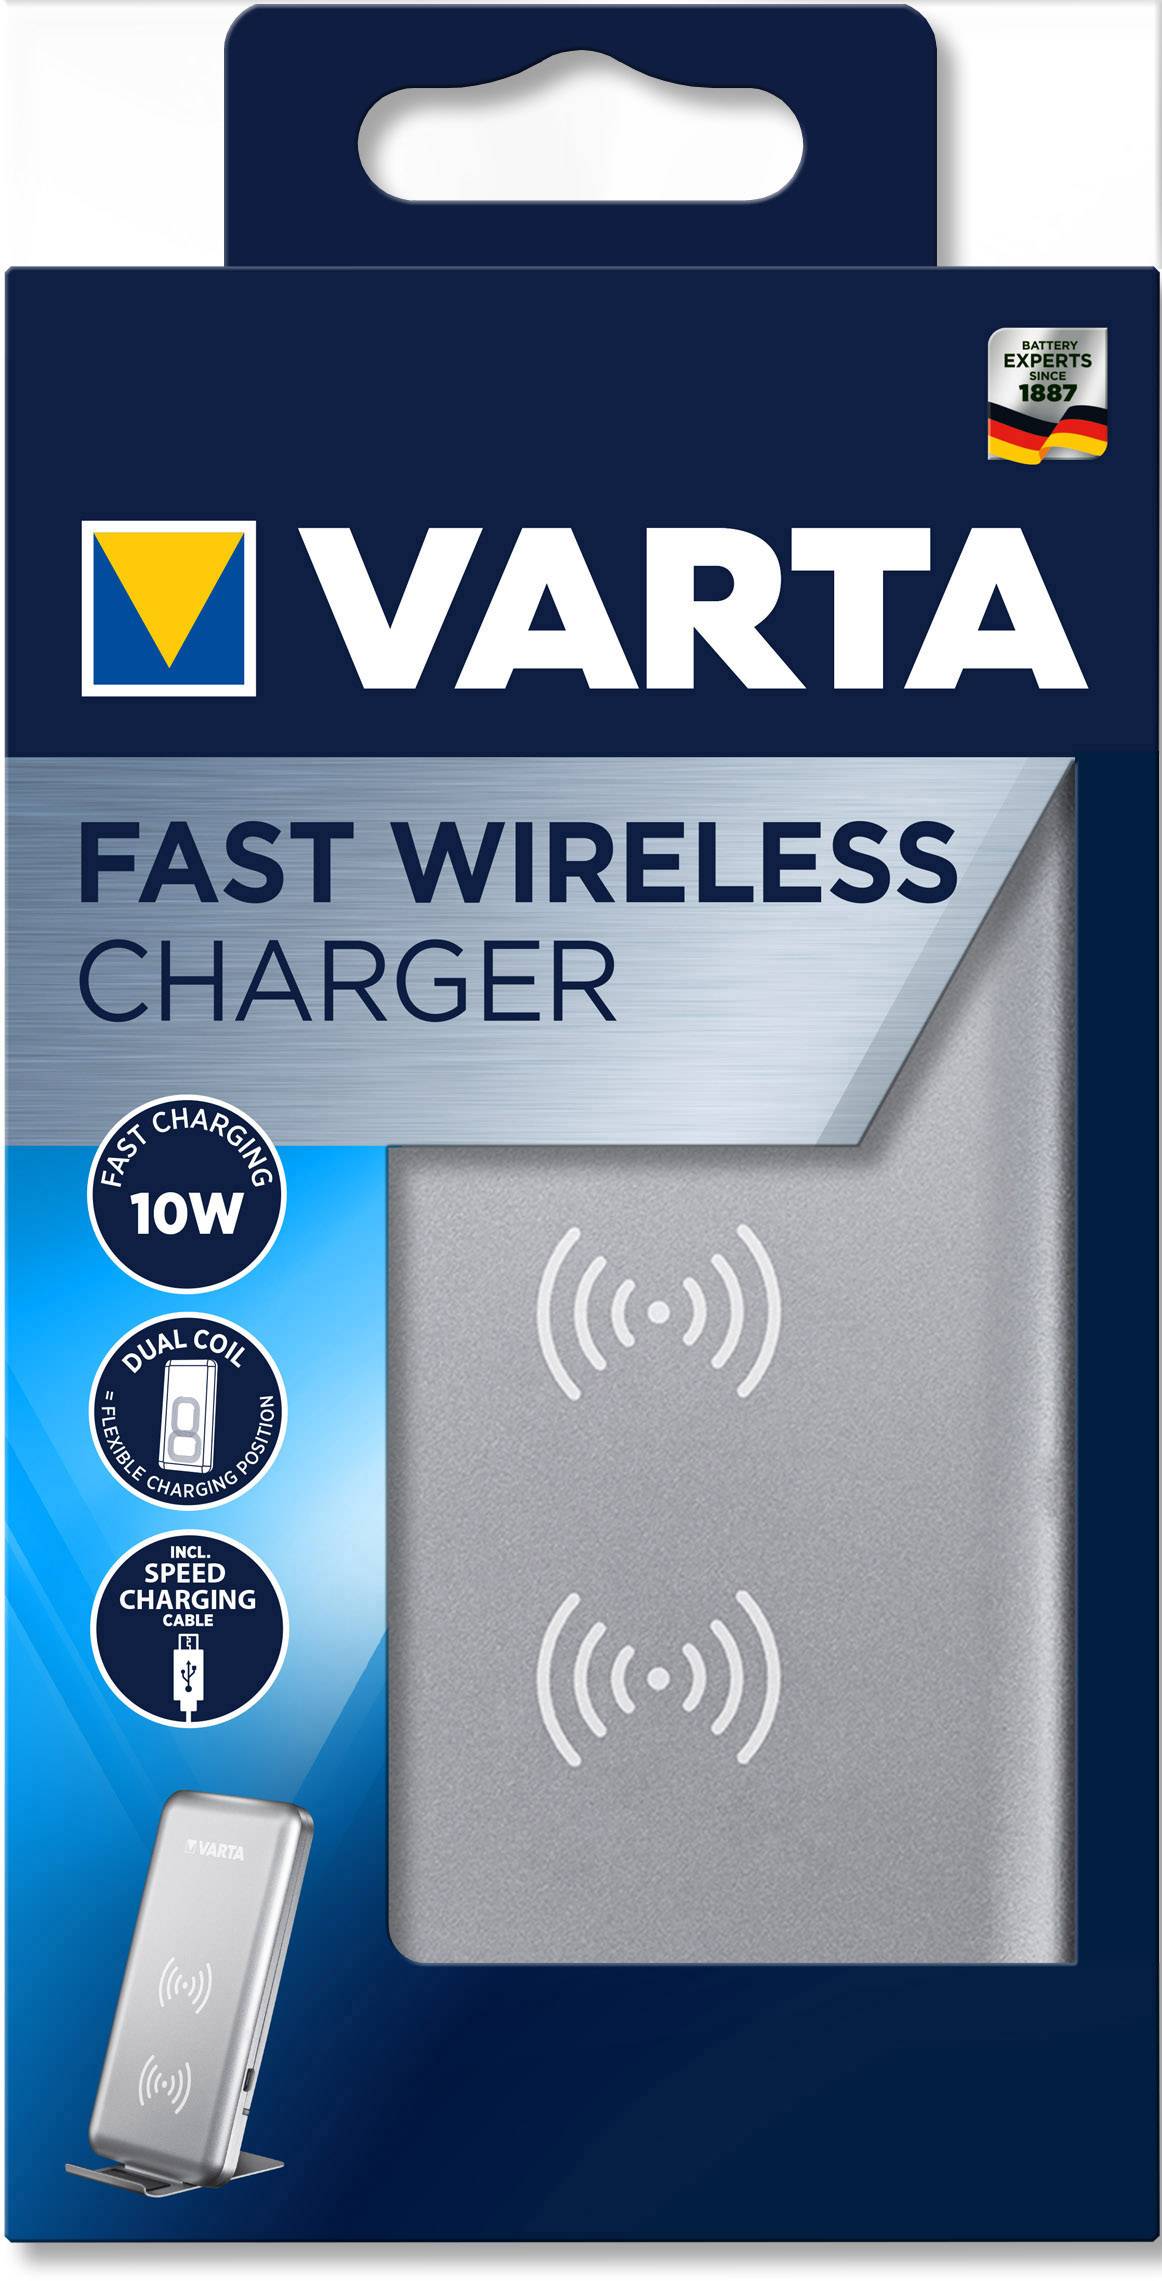 varta-wireless-charger-dual-coil-2C-fast-wireless-2C-10w-2C-silver--28eu-blister-29